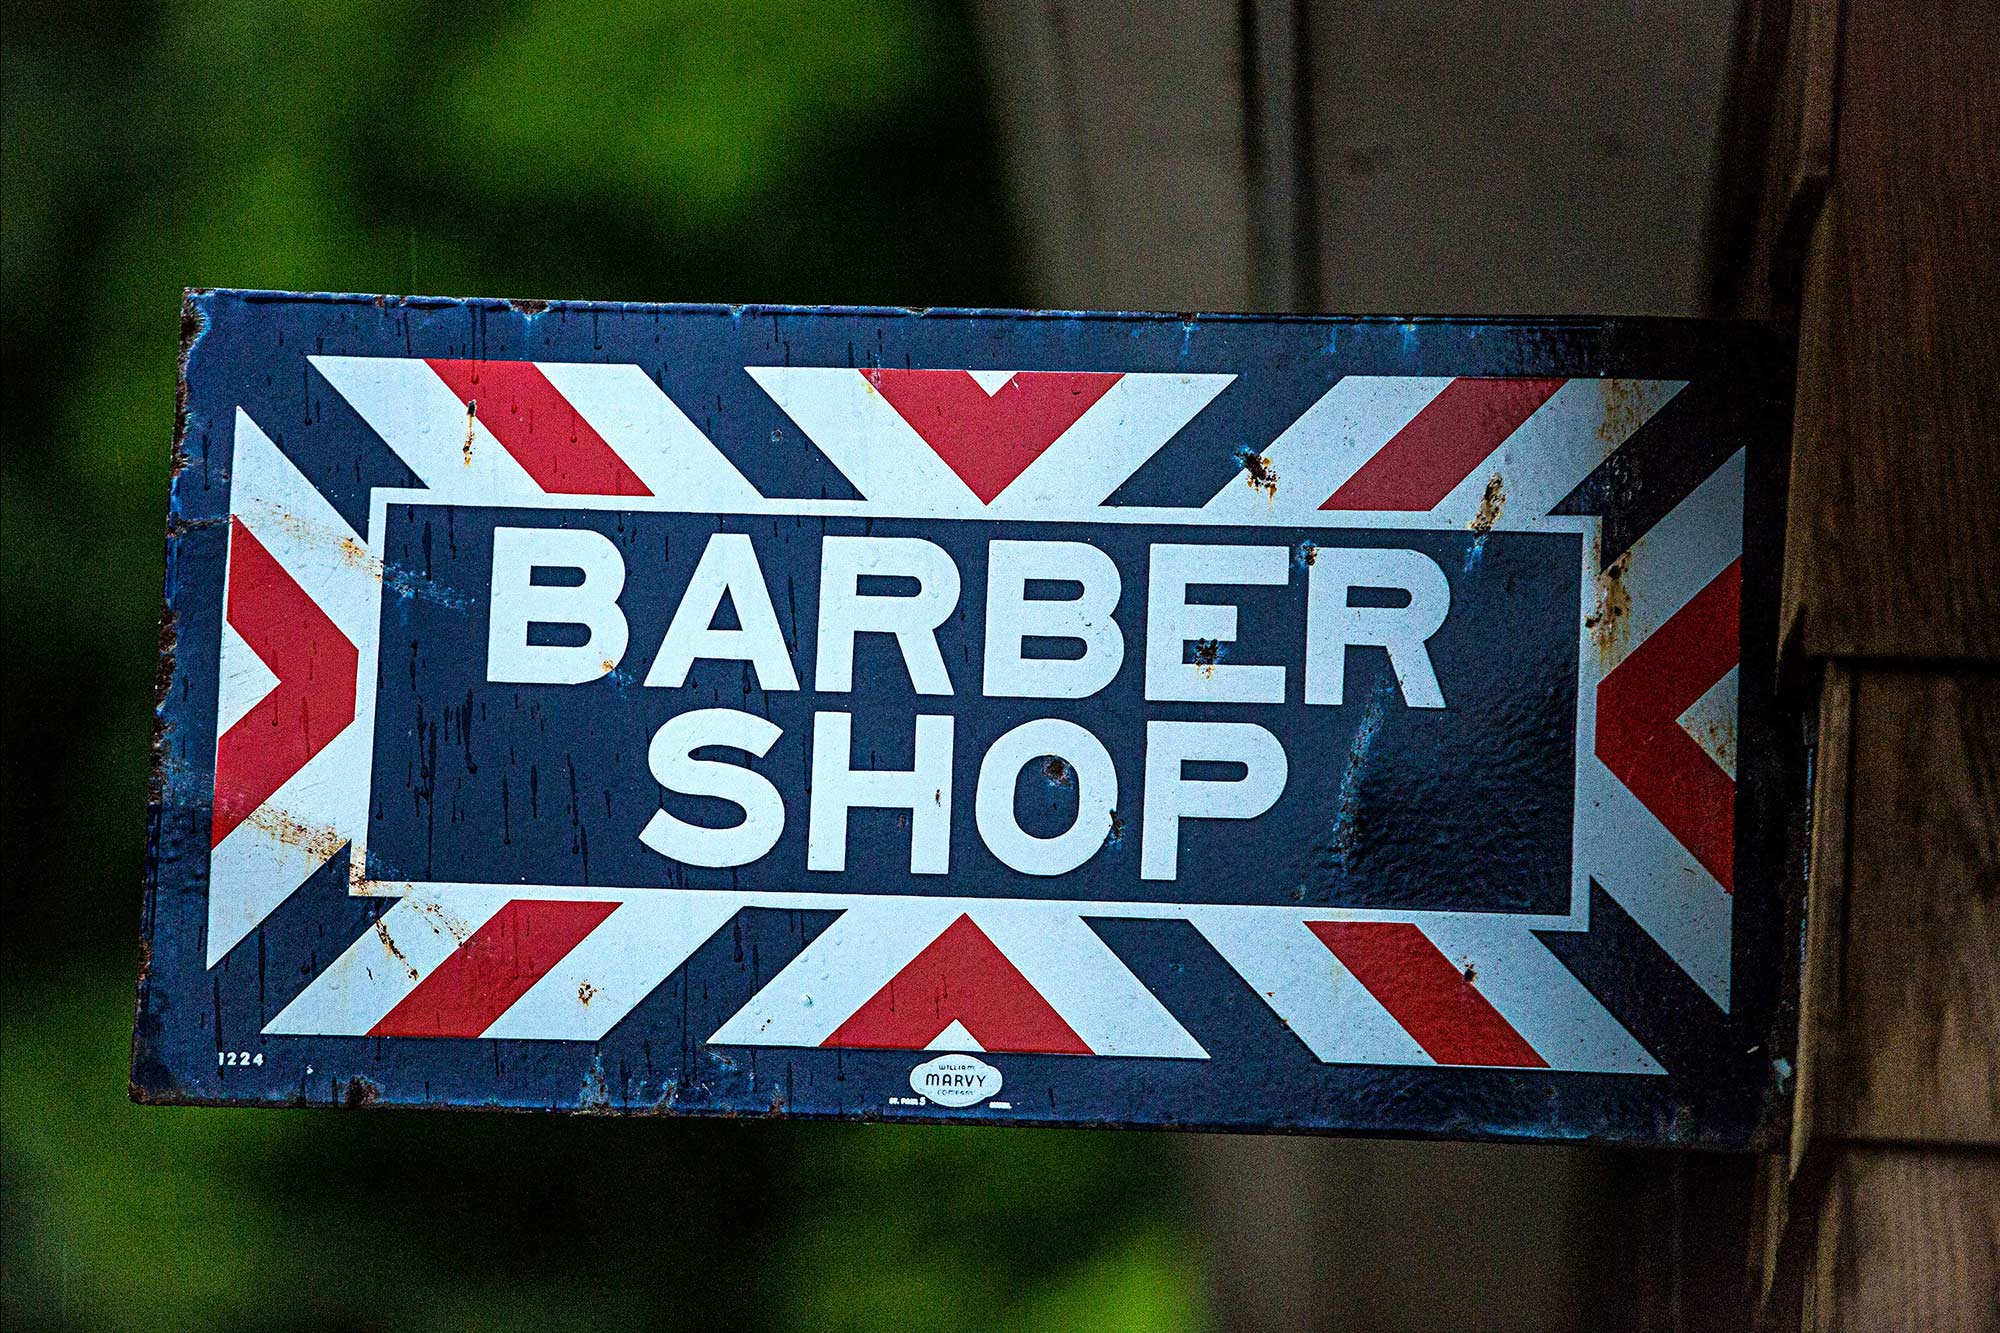 Barber Shop, Avon, CT